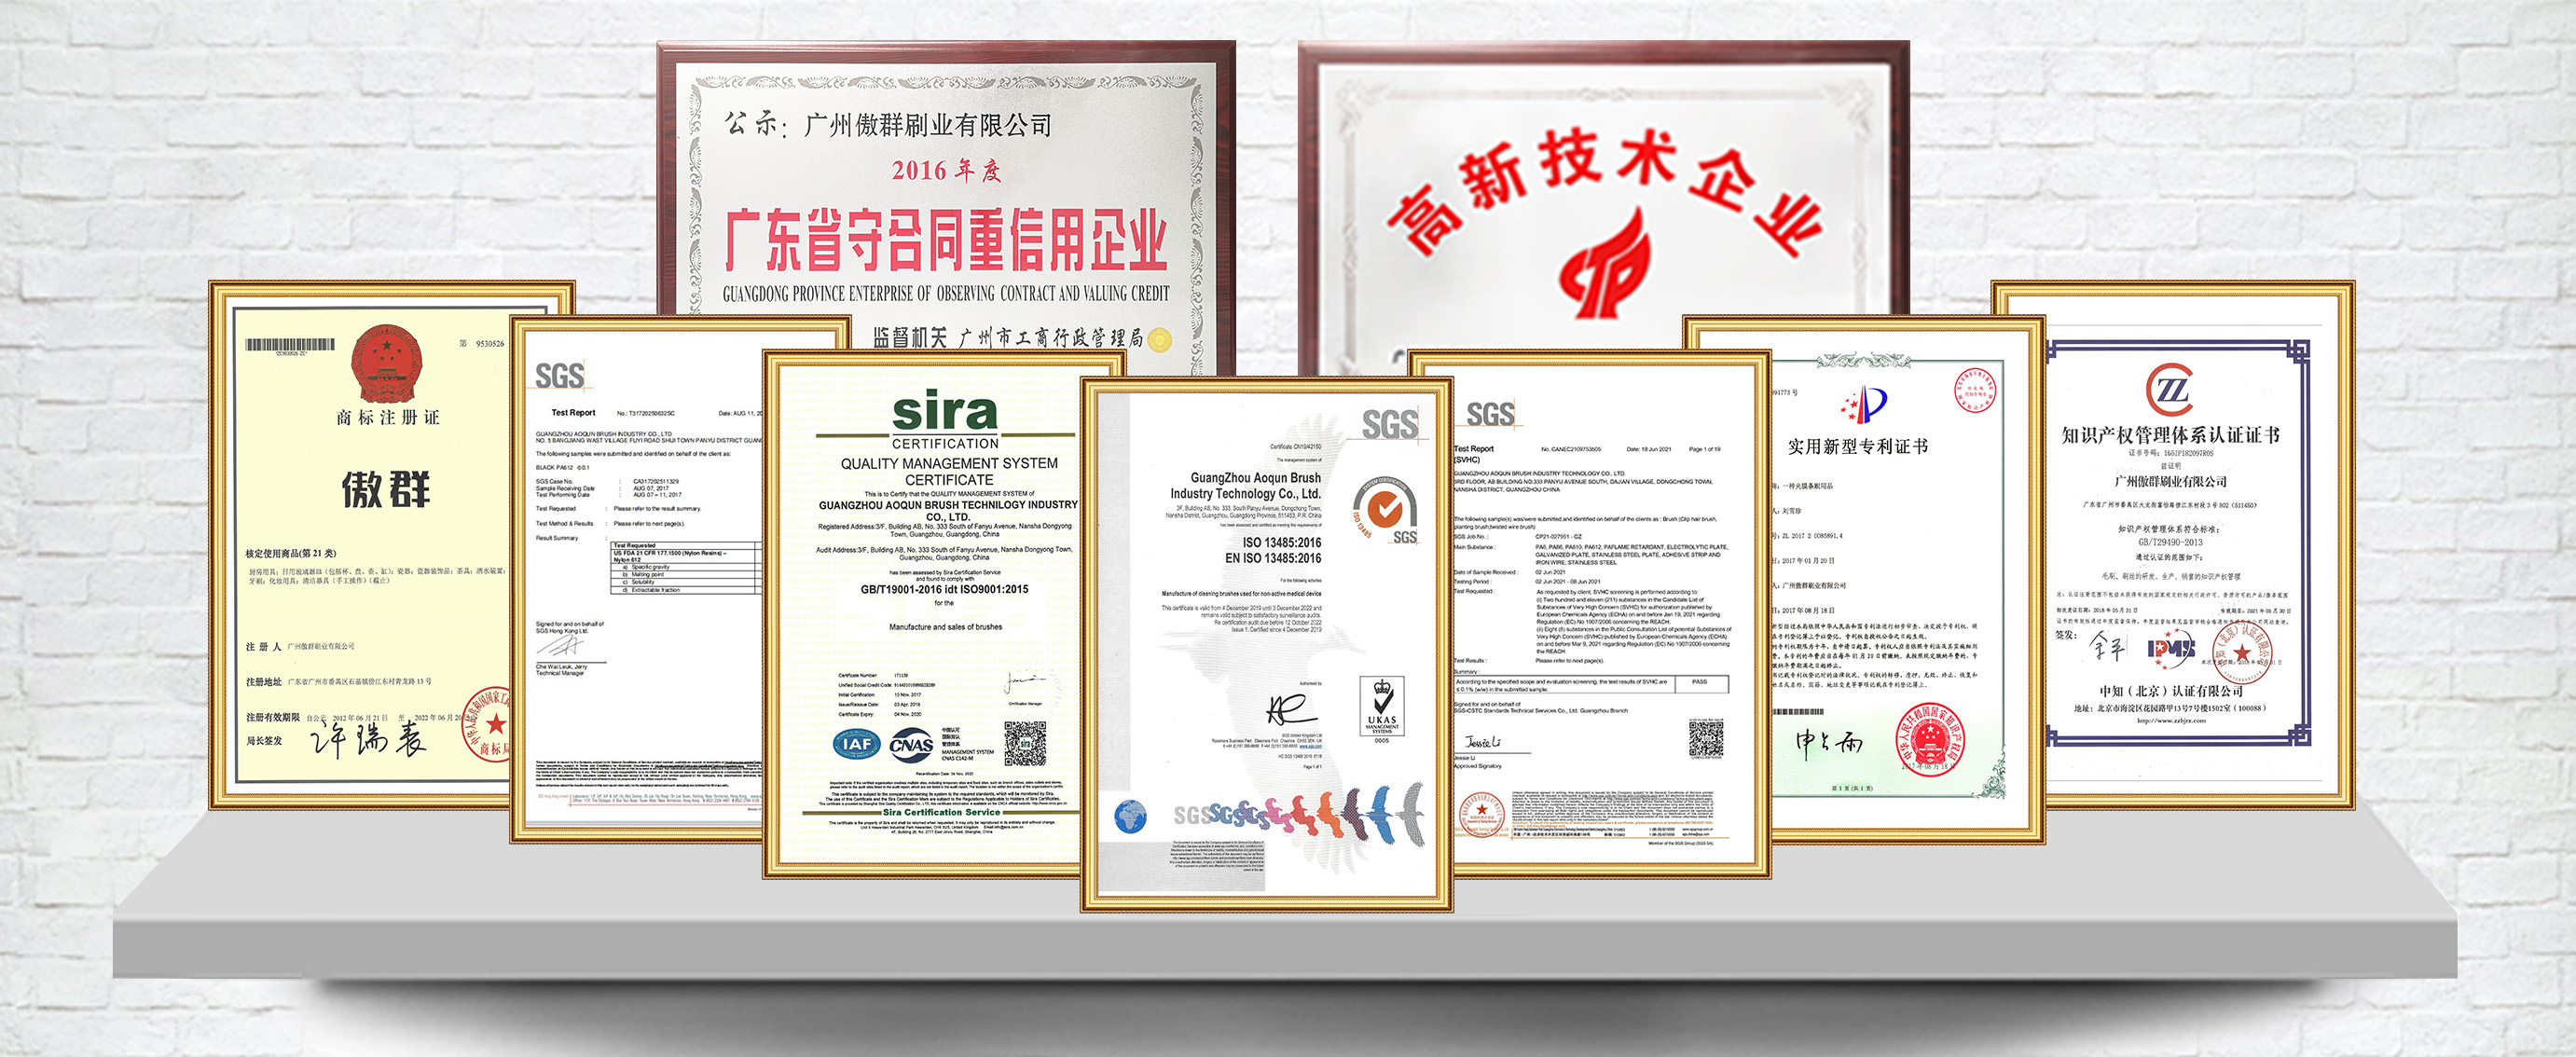 AOQUN Brush Certifications